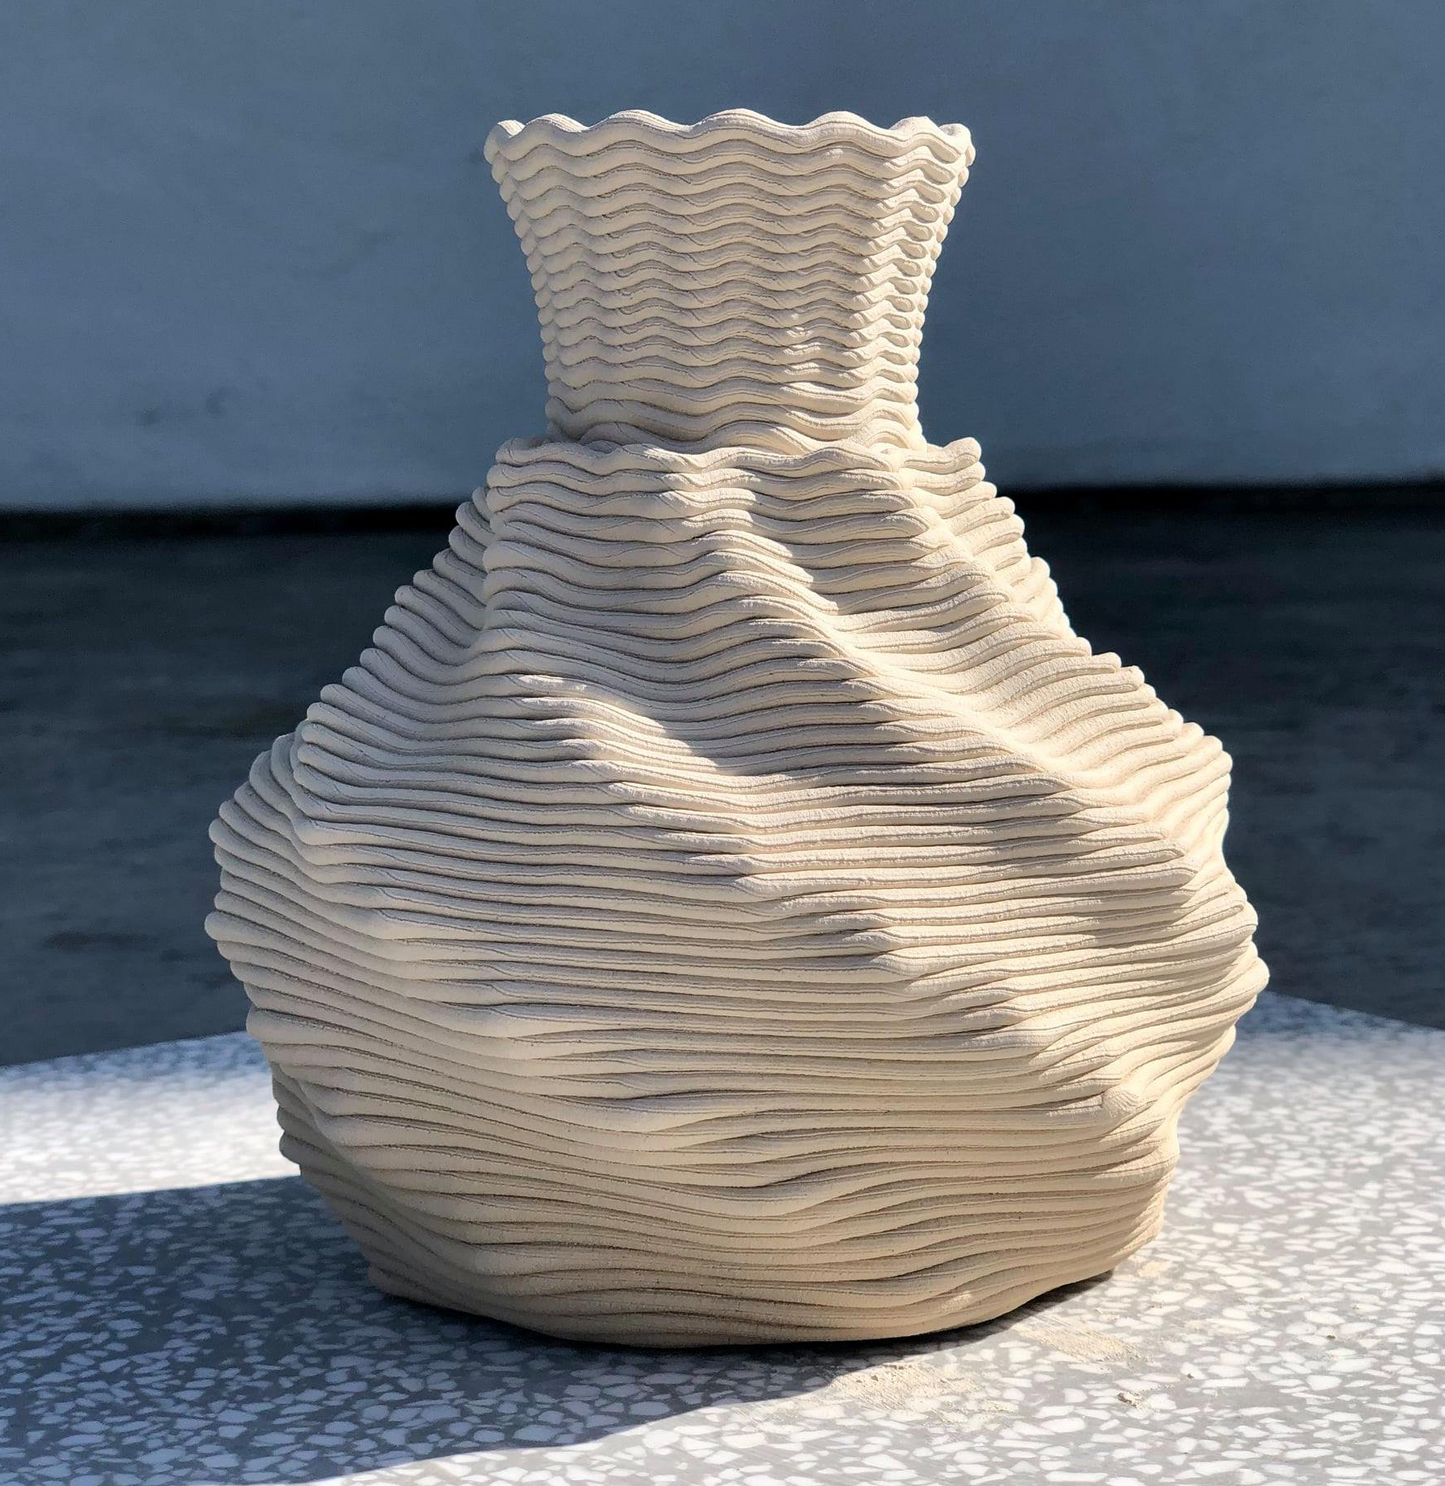 Art Fair Silent Auction Winner | Private 3D Clay Printing Lesson